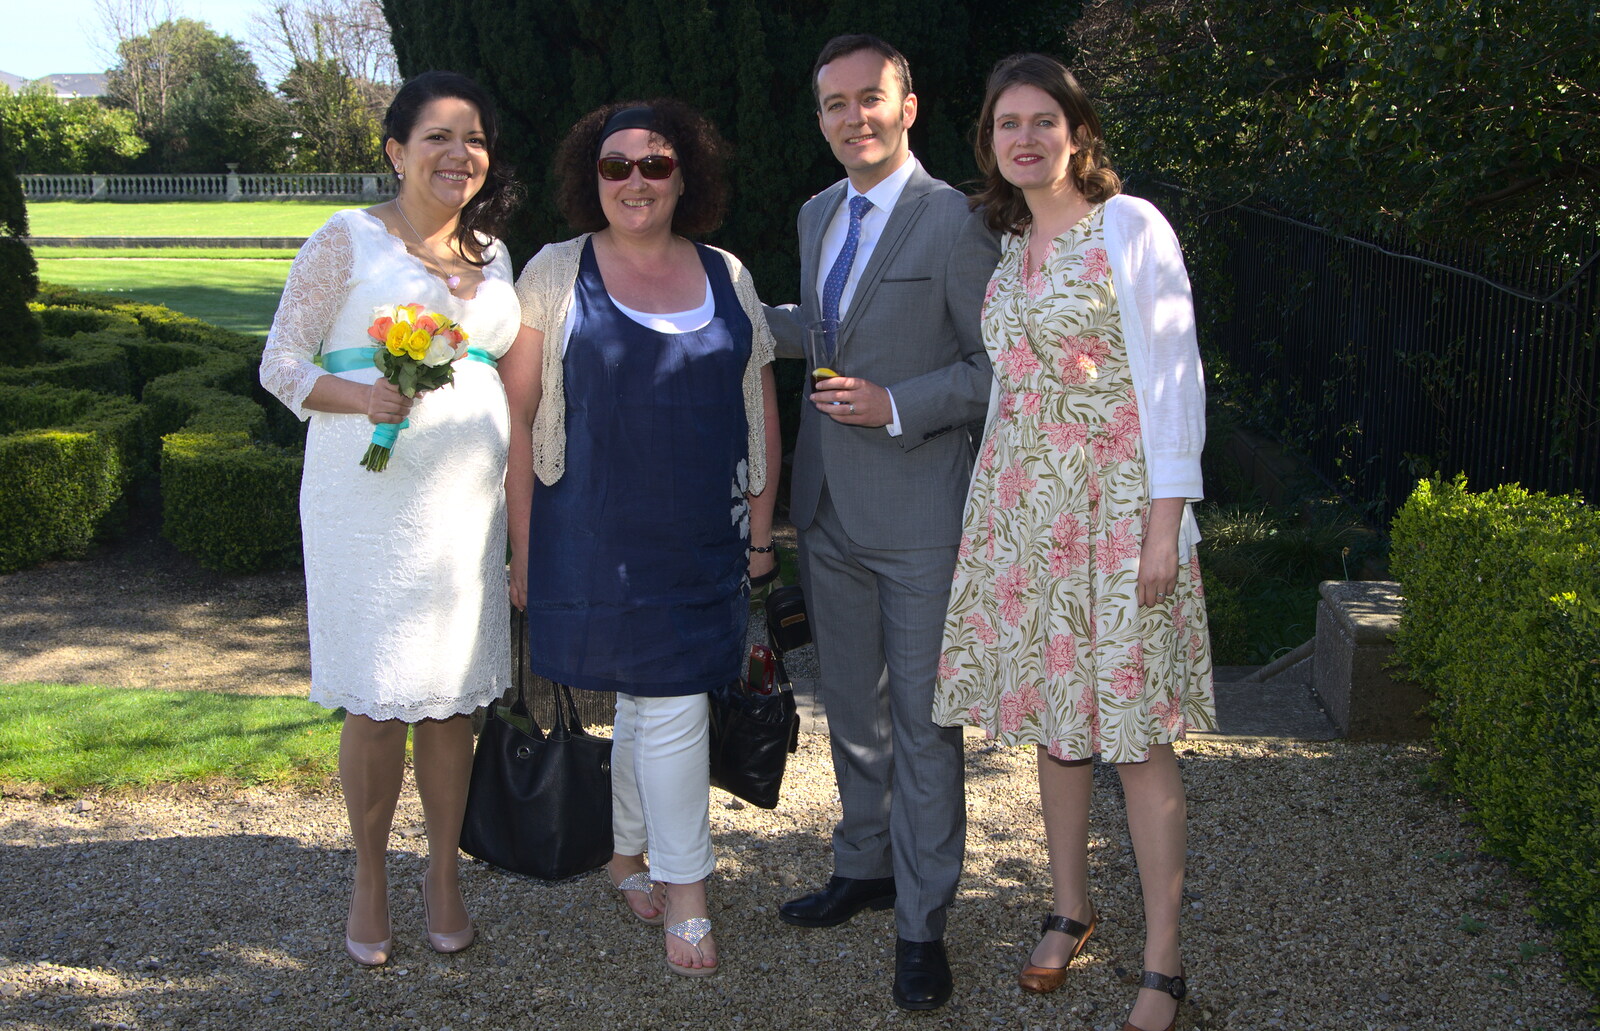 Haryanna, Da Wheeze, James and Isobel from James and Haryanna's Wedding, Grand Canal Dock, Dublin - 15th April 2015